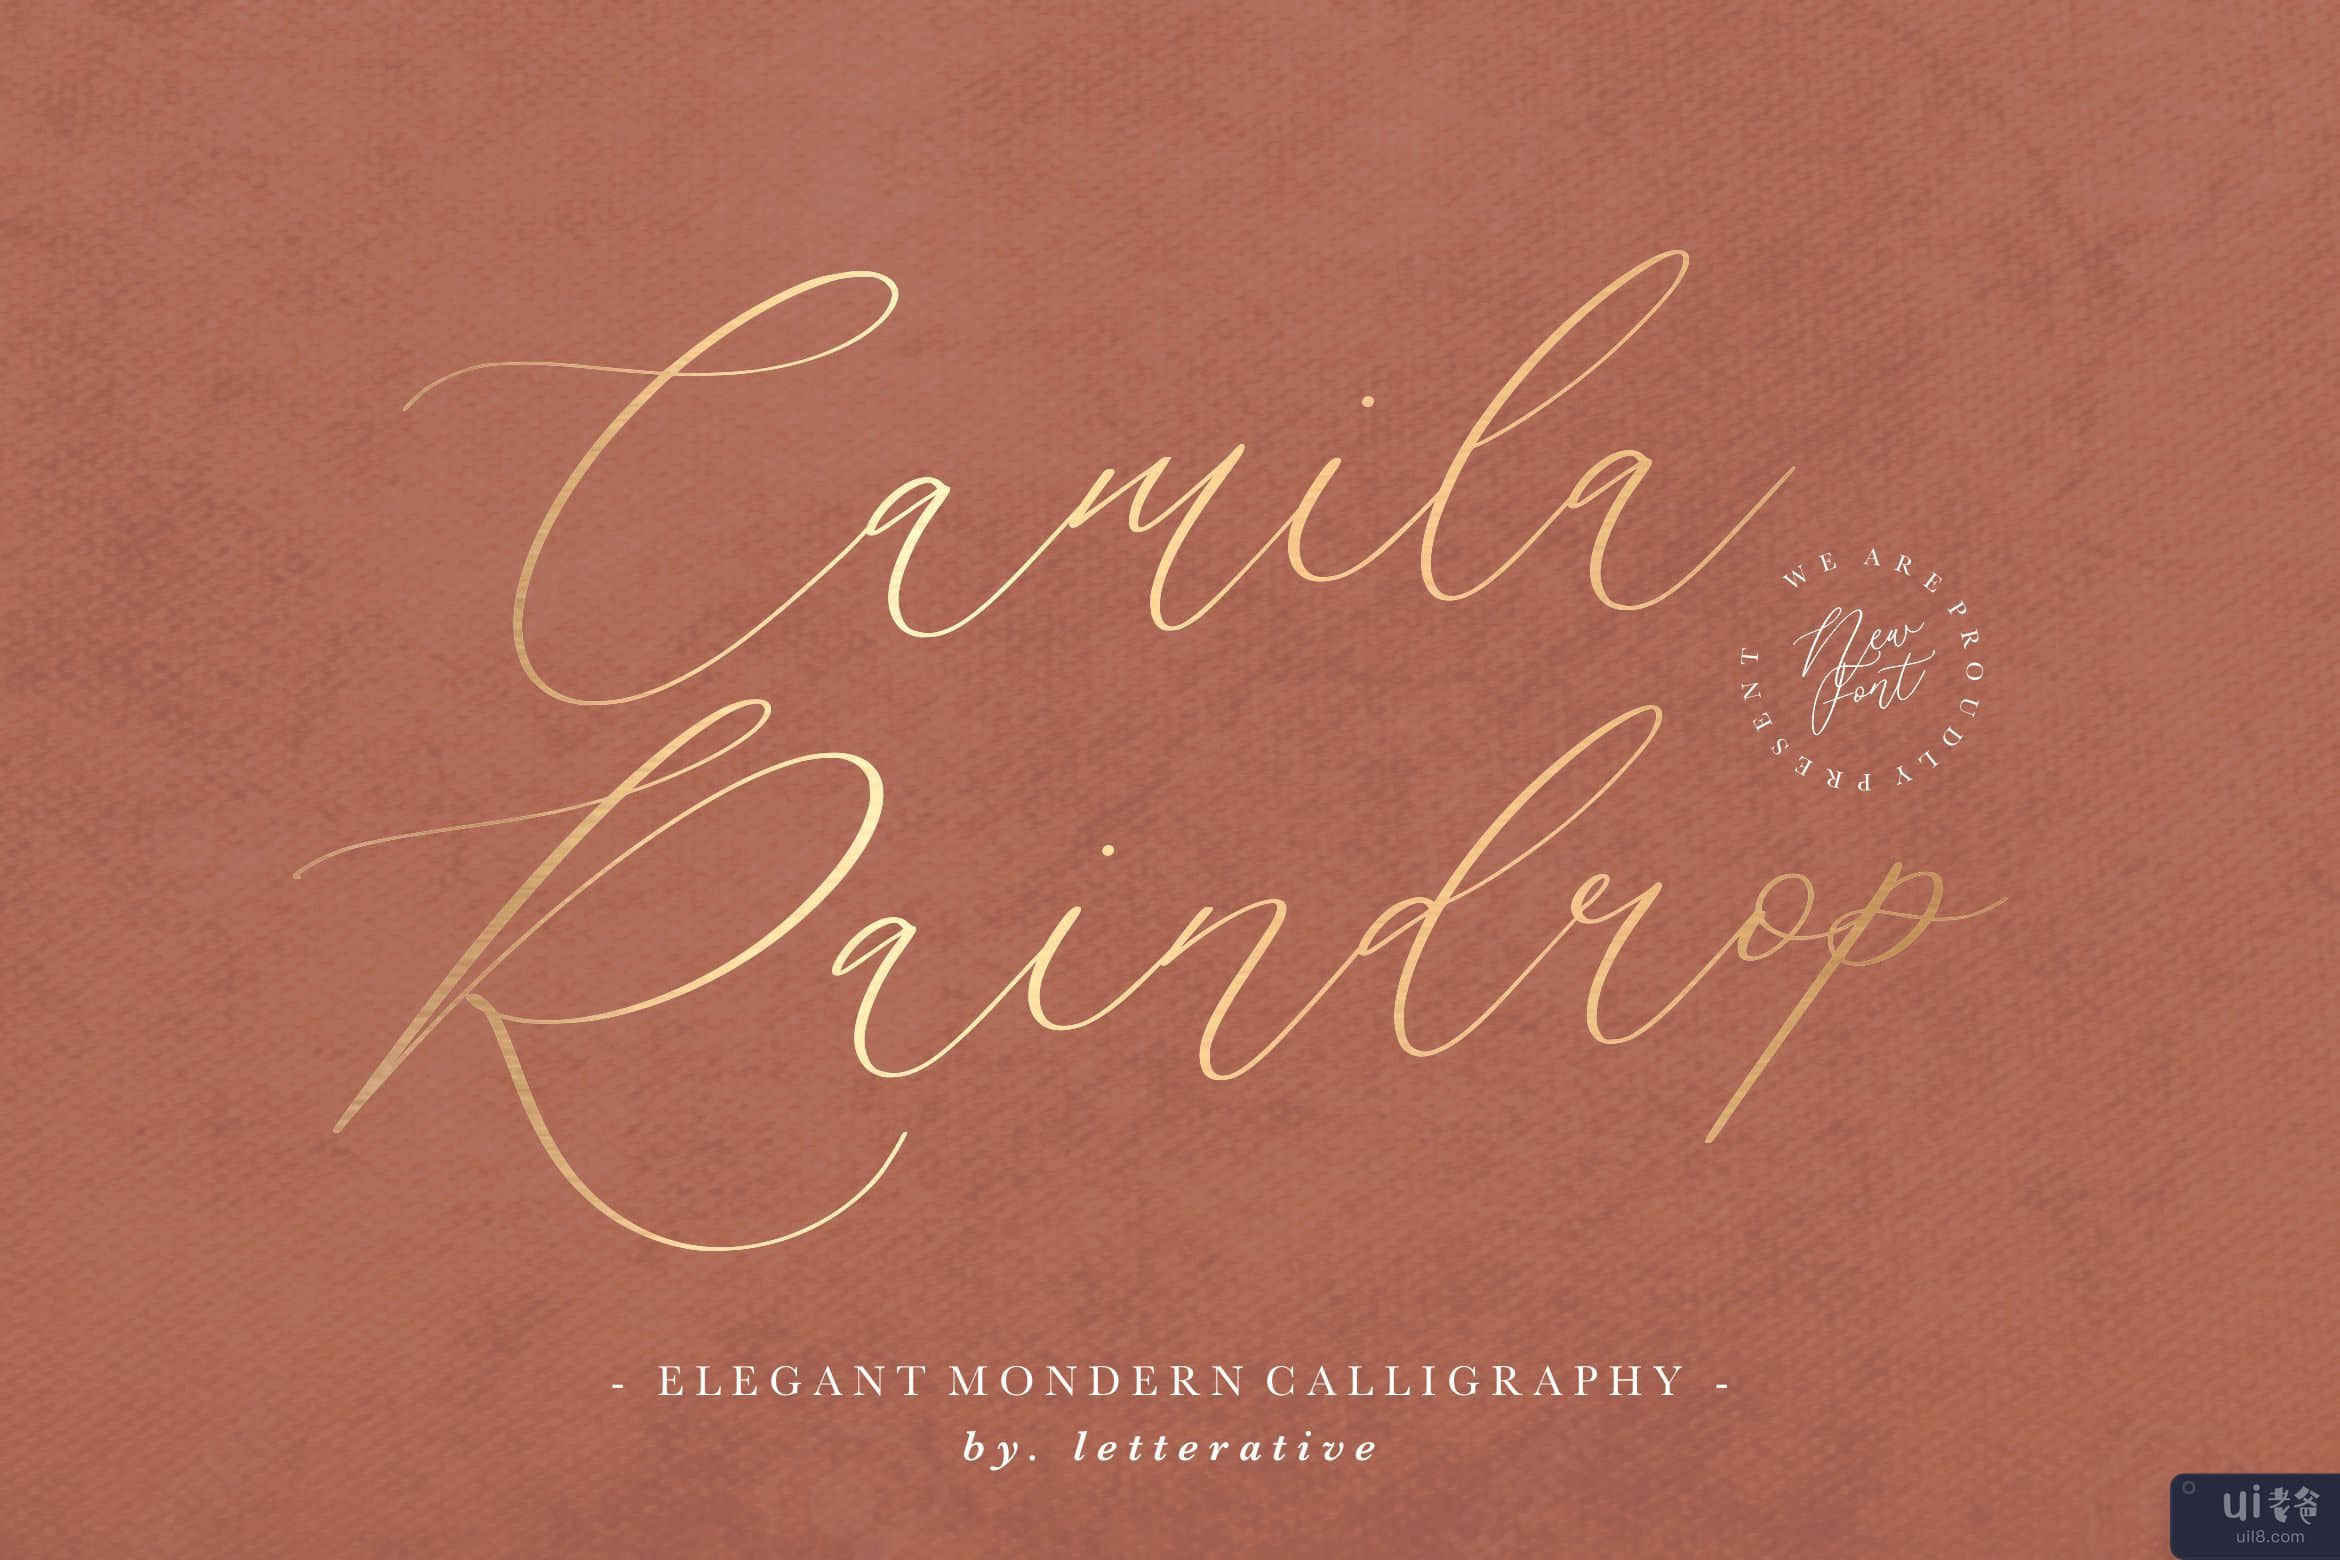 Camila Raindrop 是一款优雅的现代书法字体(Camila Raindrop is a Elegant Modern Calligraphy Font)插图7